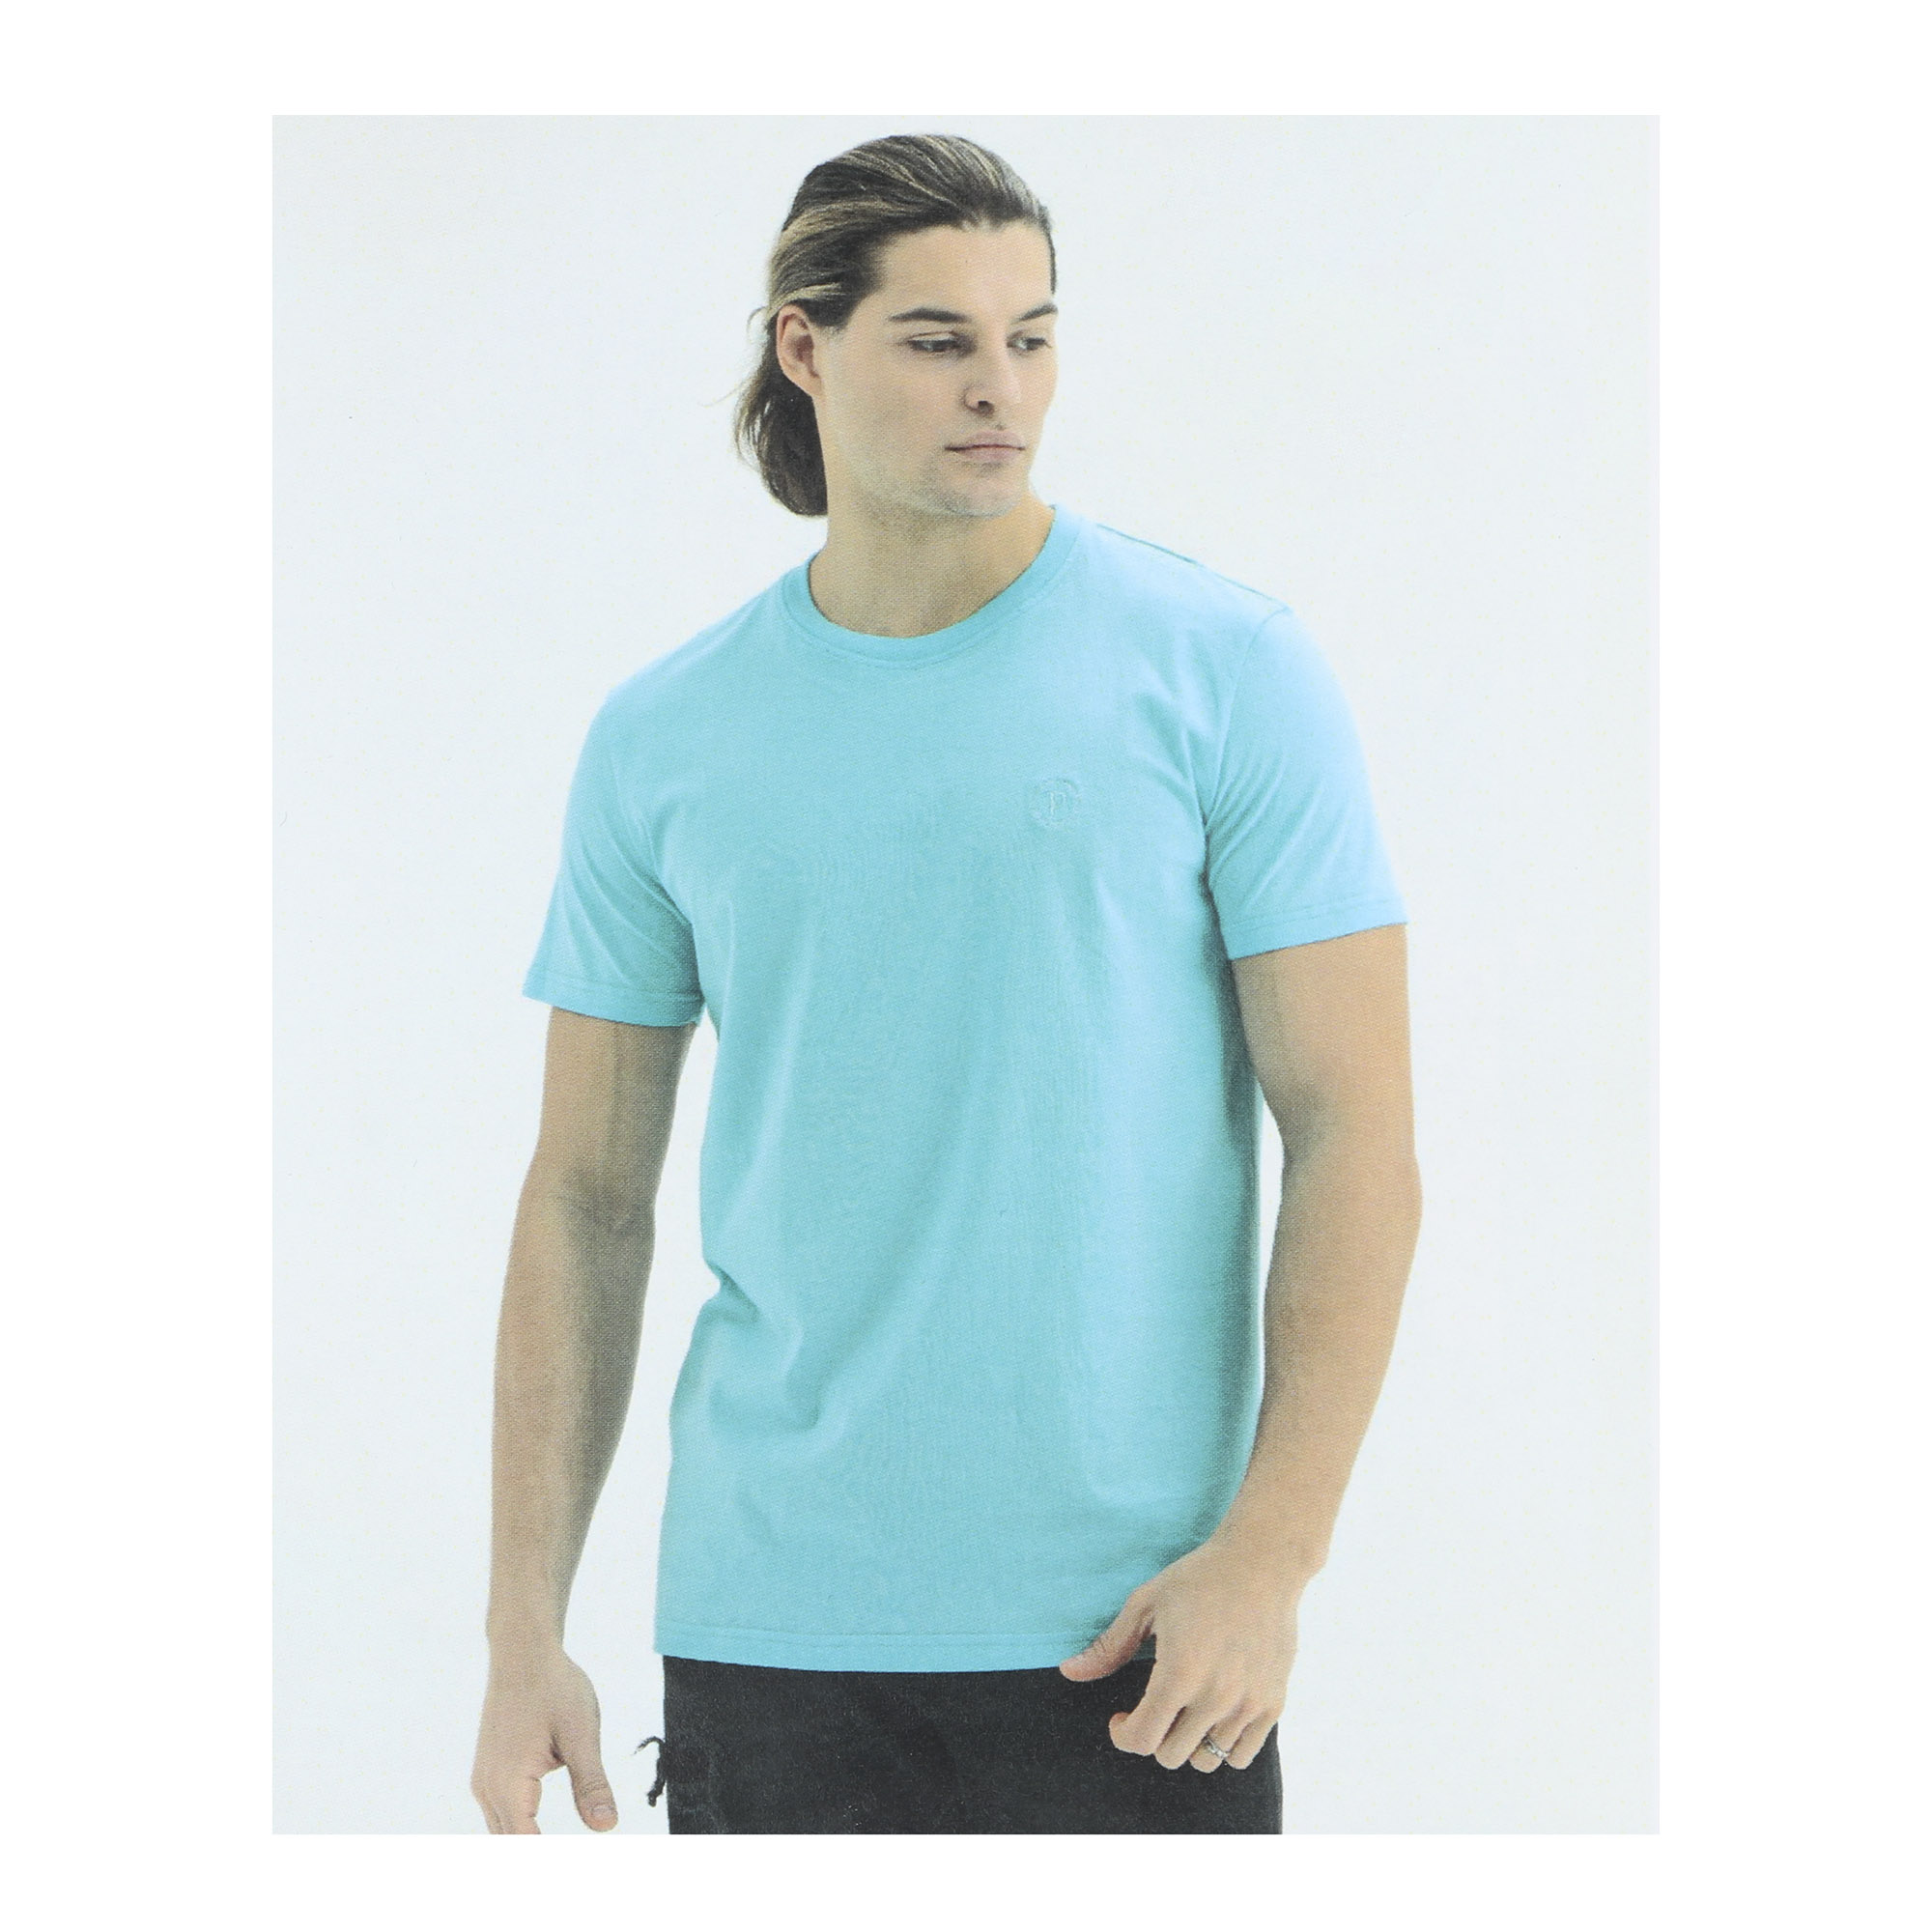 Мужская футболка Pantelemone MF-914 46 ментоловая, цвет ментоловый, размер 46 - фото 4